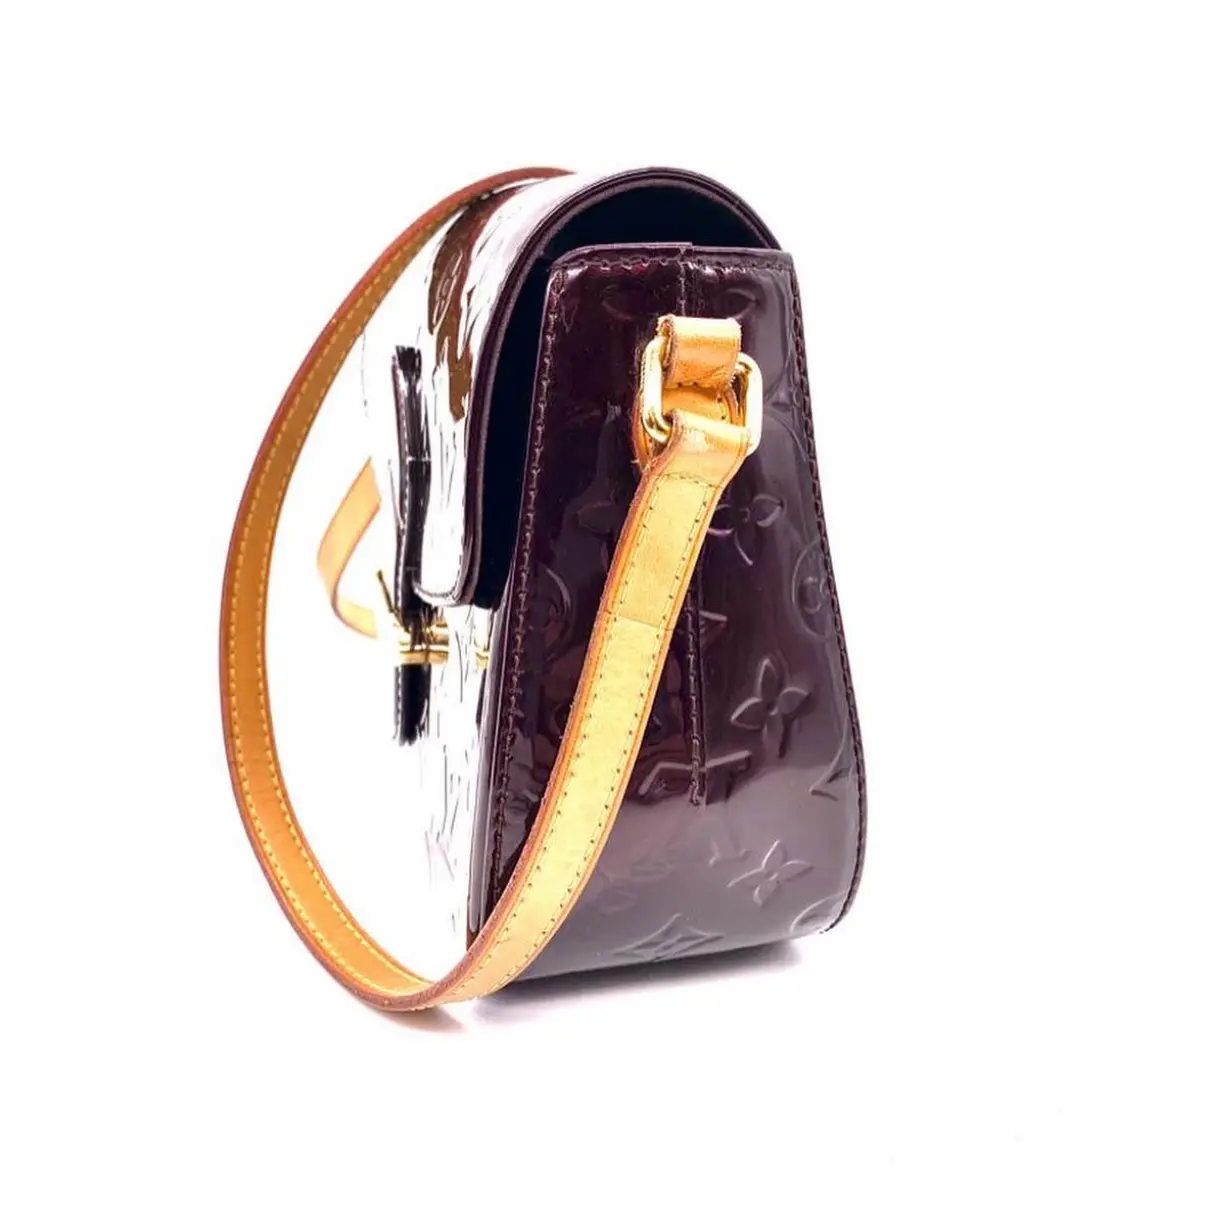 Bellflower patent leather crossbody bag Louis Vuitton